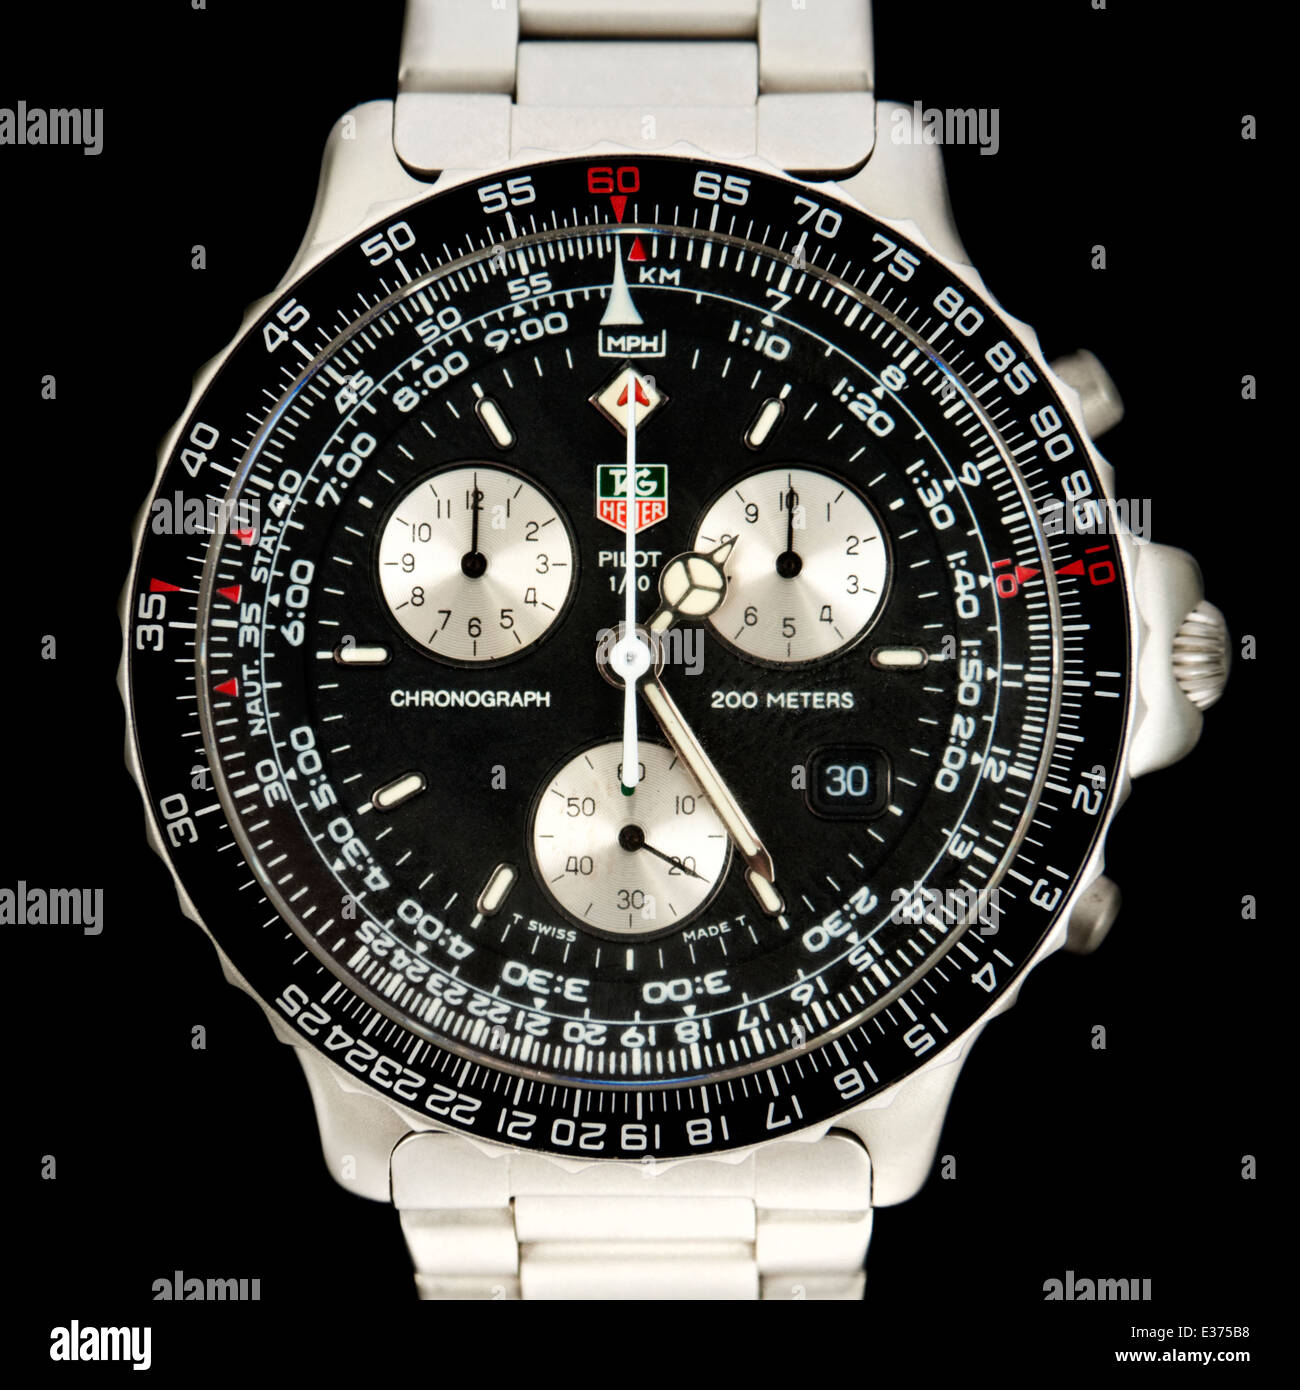 1990er Jahre Tag Heuer Pilot 1/10 Chronograph Herren Armbanduhr (Modell 530-306). Stockfoto